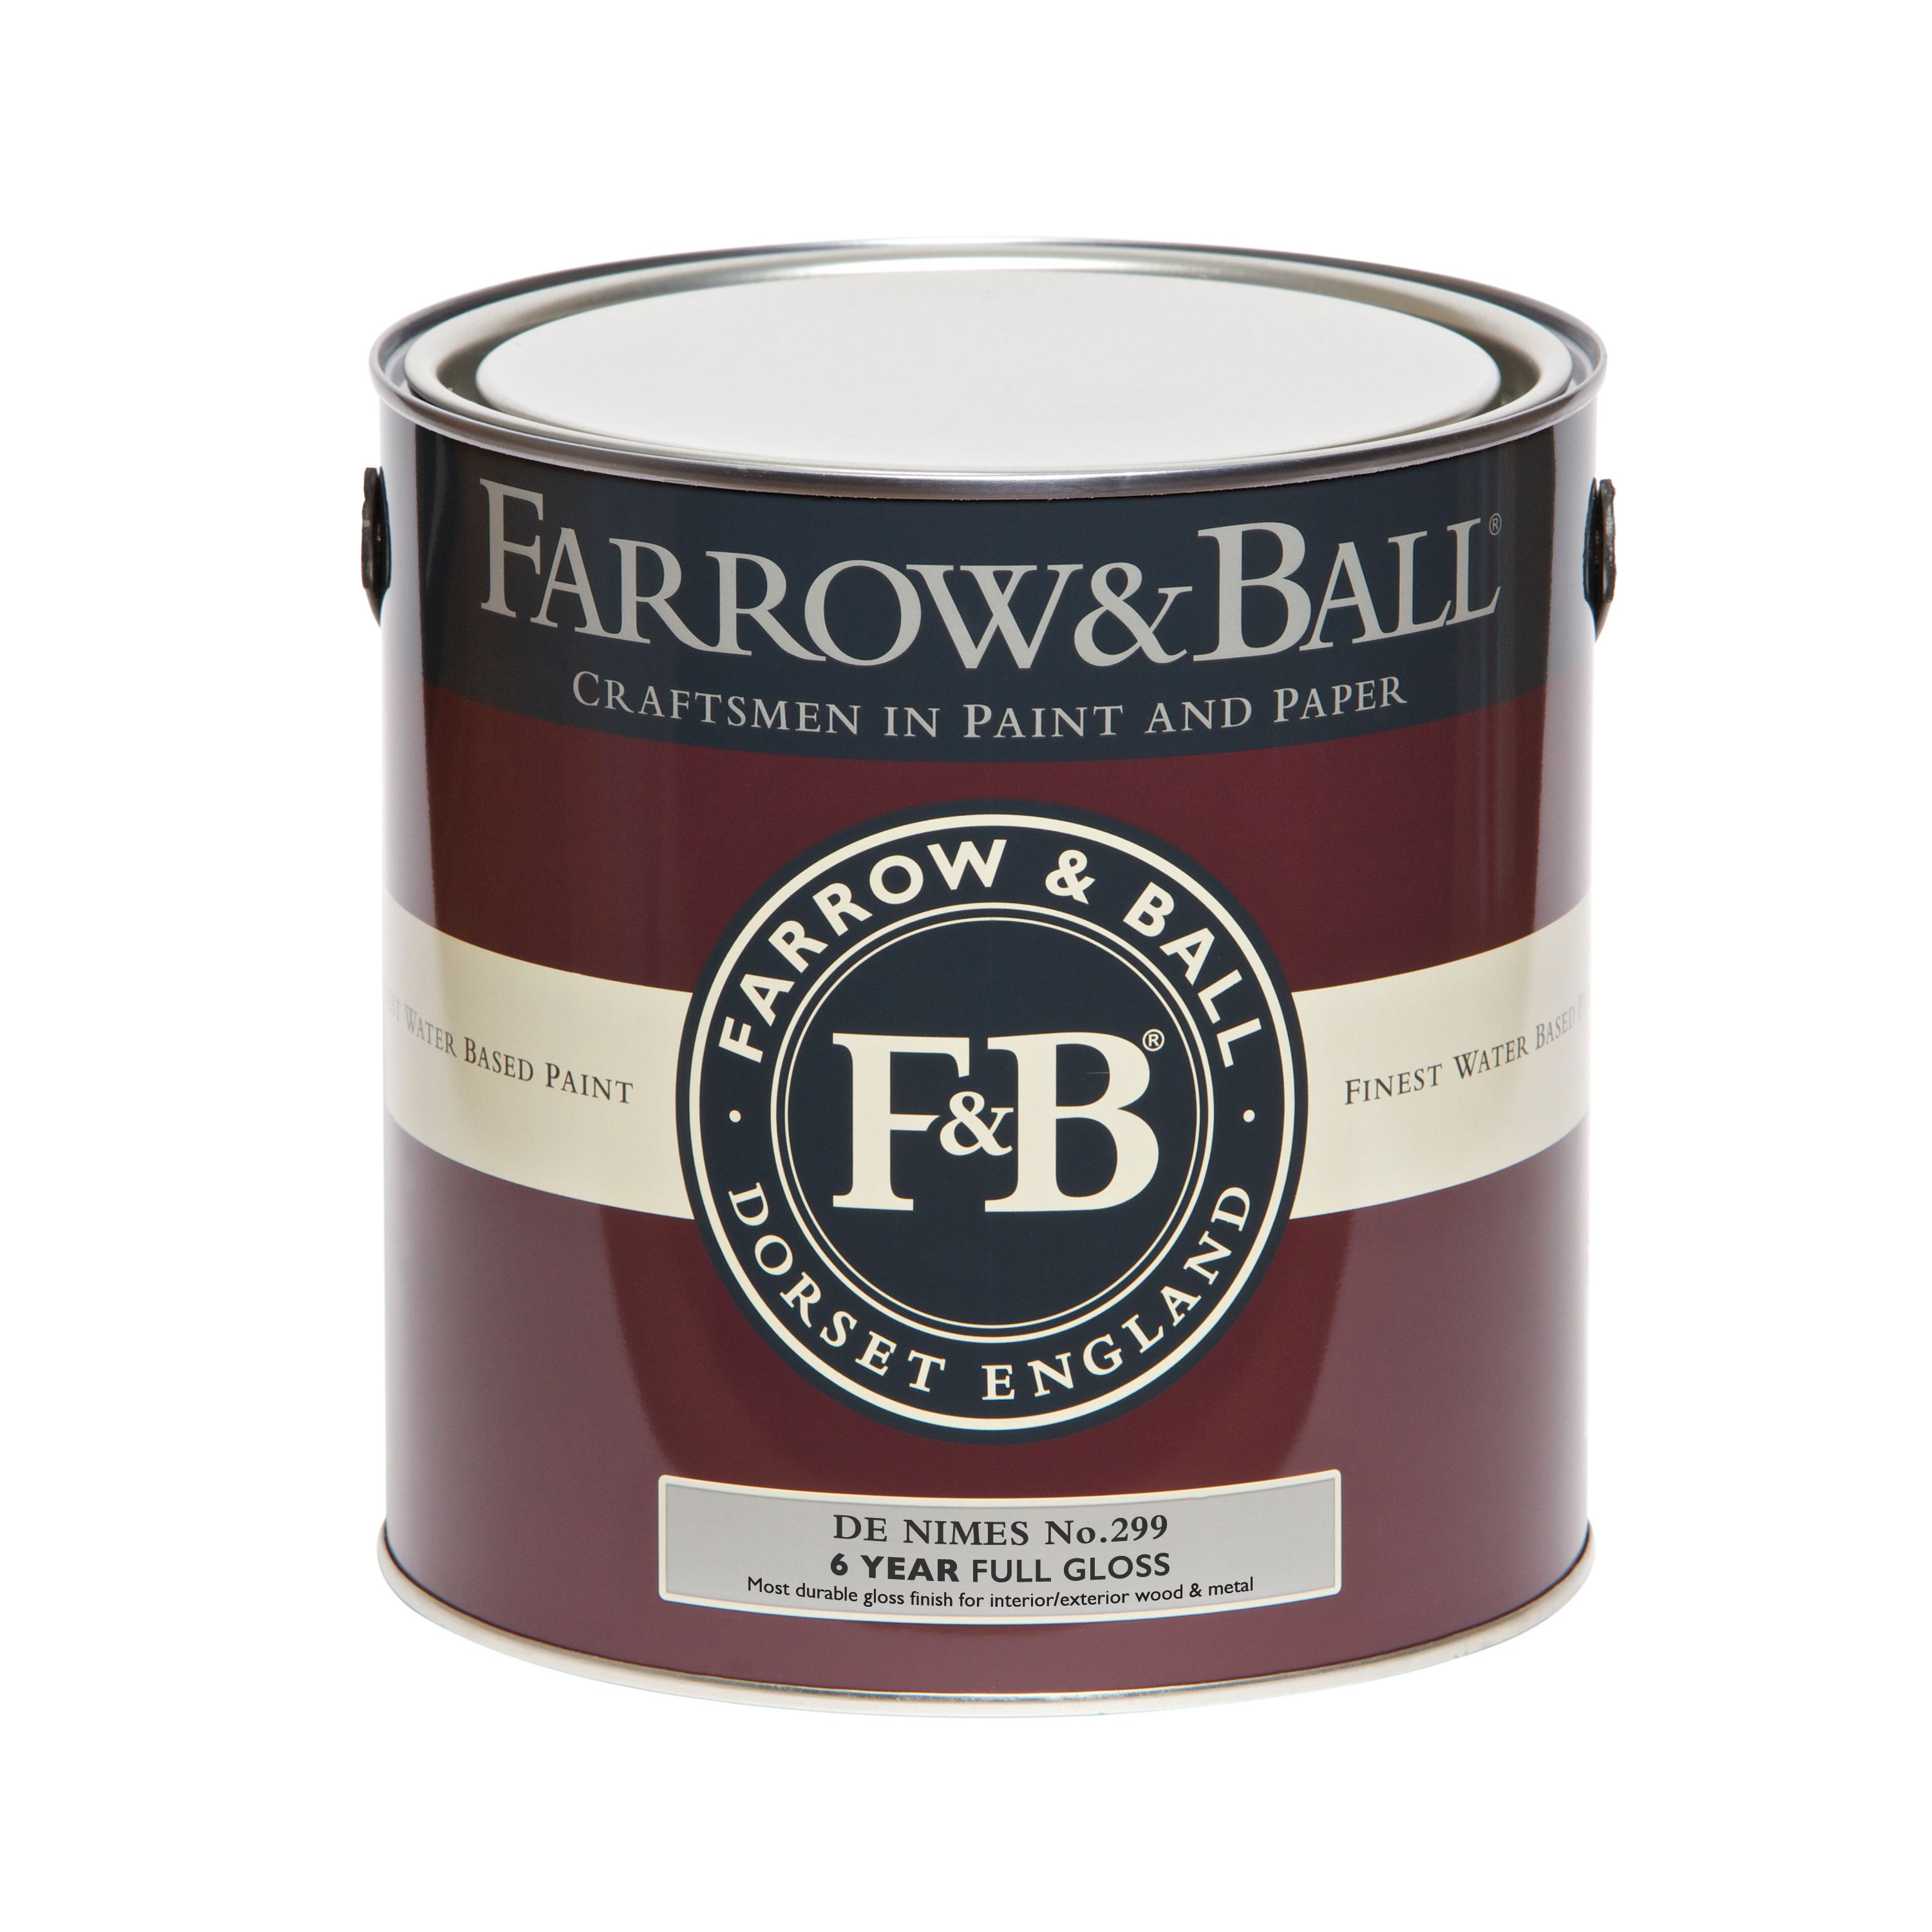 Farrow & Ball De nimes Gloss Metal & wood paint, 2.5L